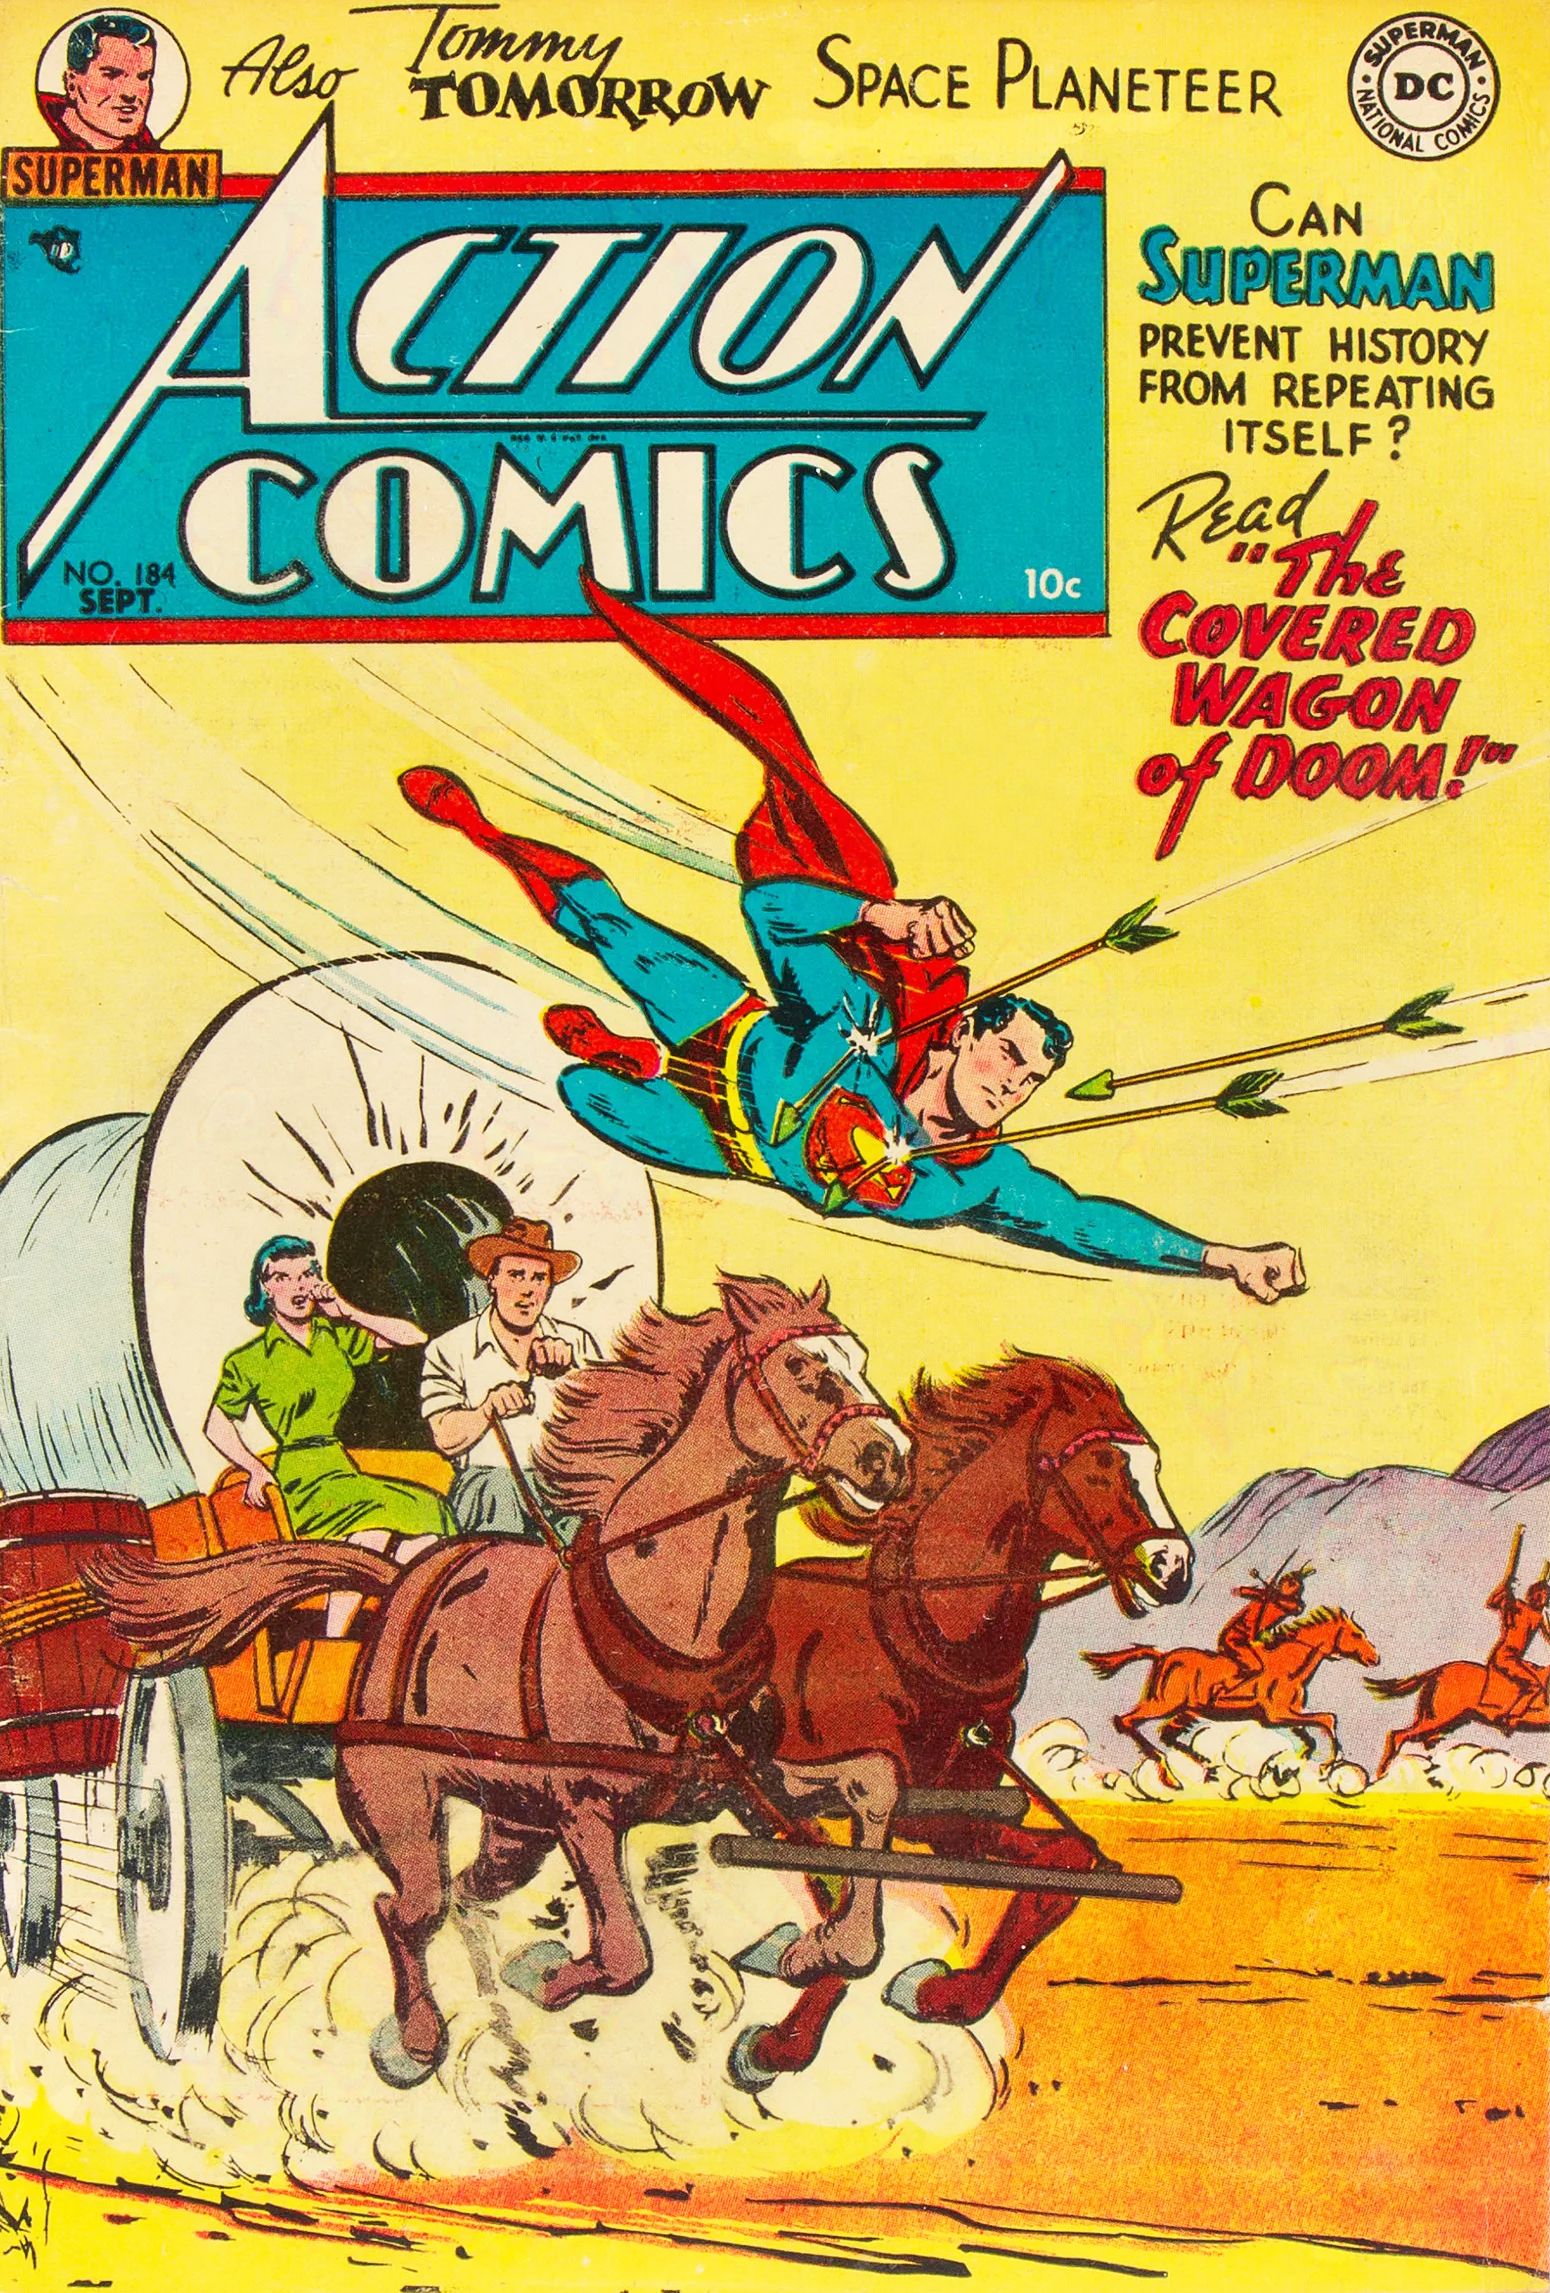 Action Comics #184 Comic